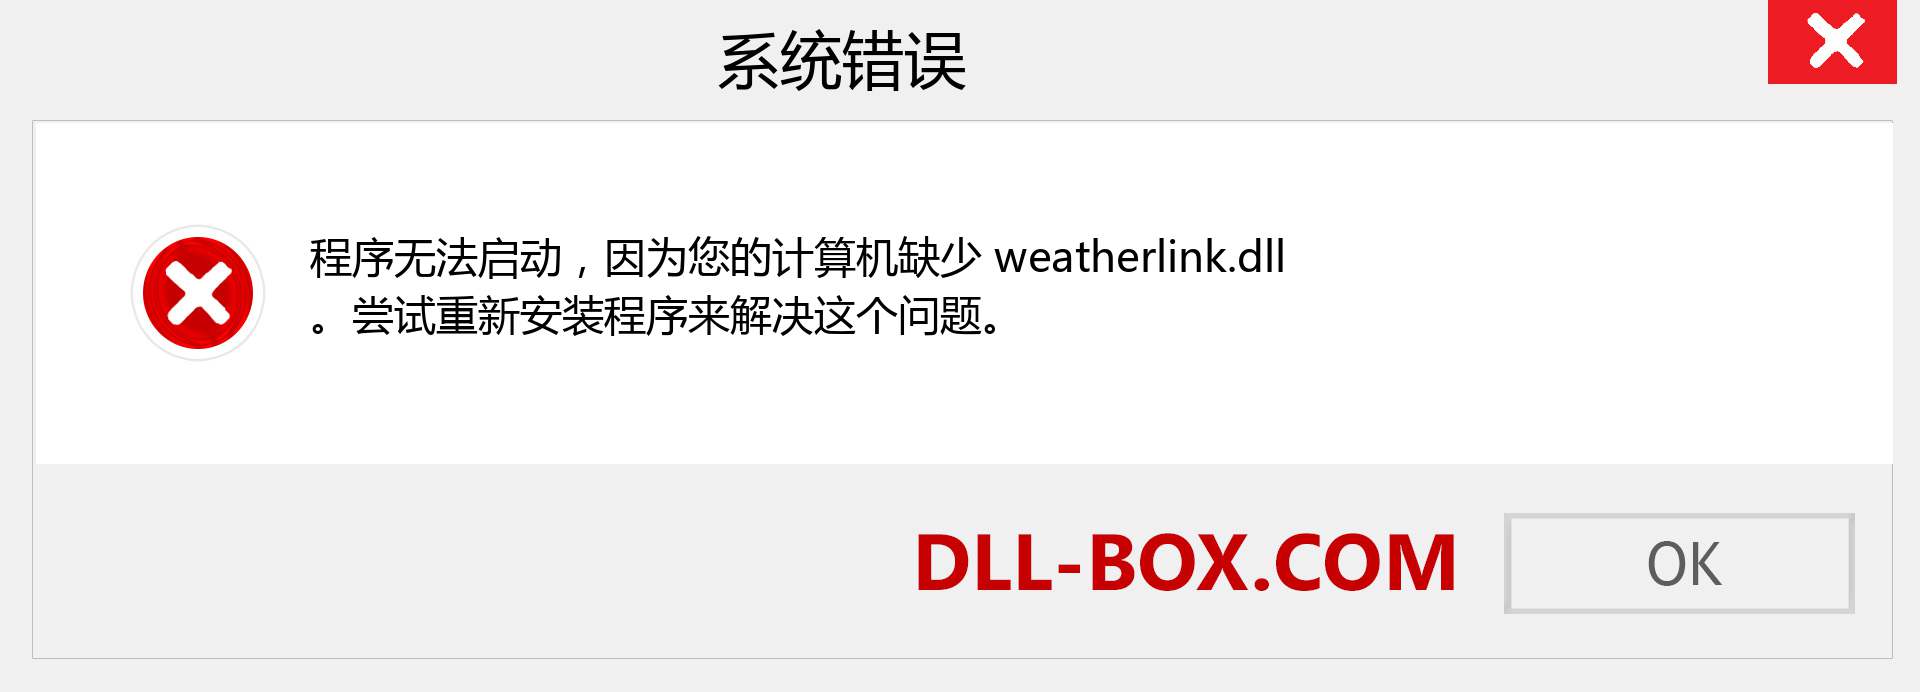 weatherlink.dll 文件丢失？。 适用于 Windows 7、8、10 的下载 - 修复 Windows、照片、图像上的 weatherlink dll 丢失错误